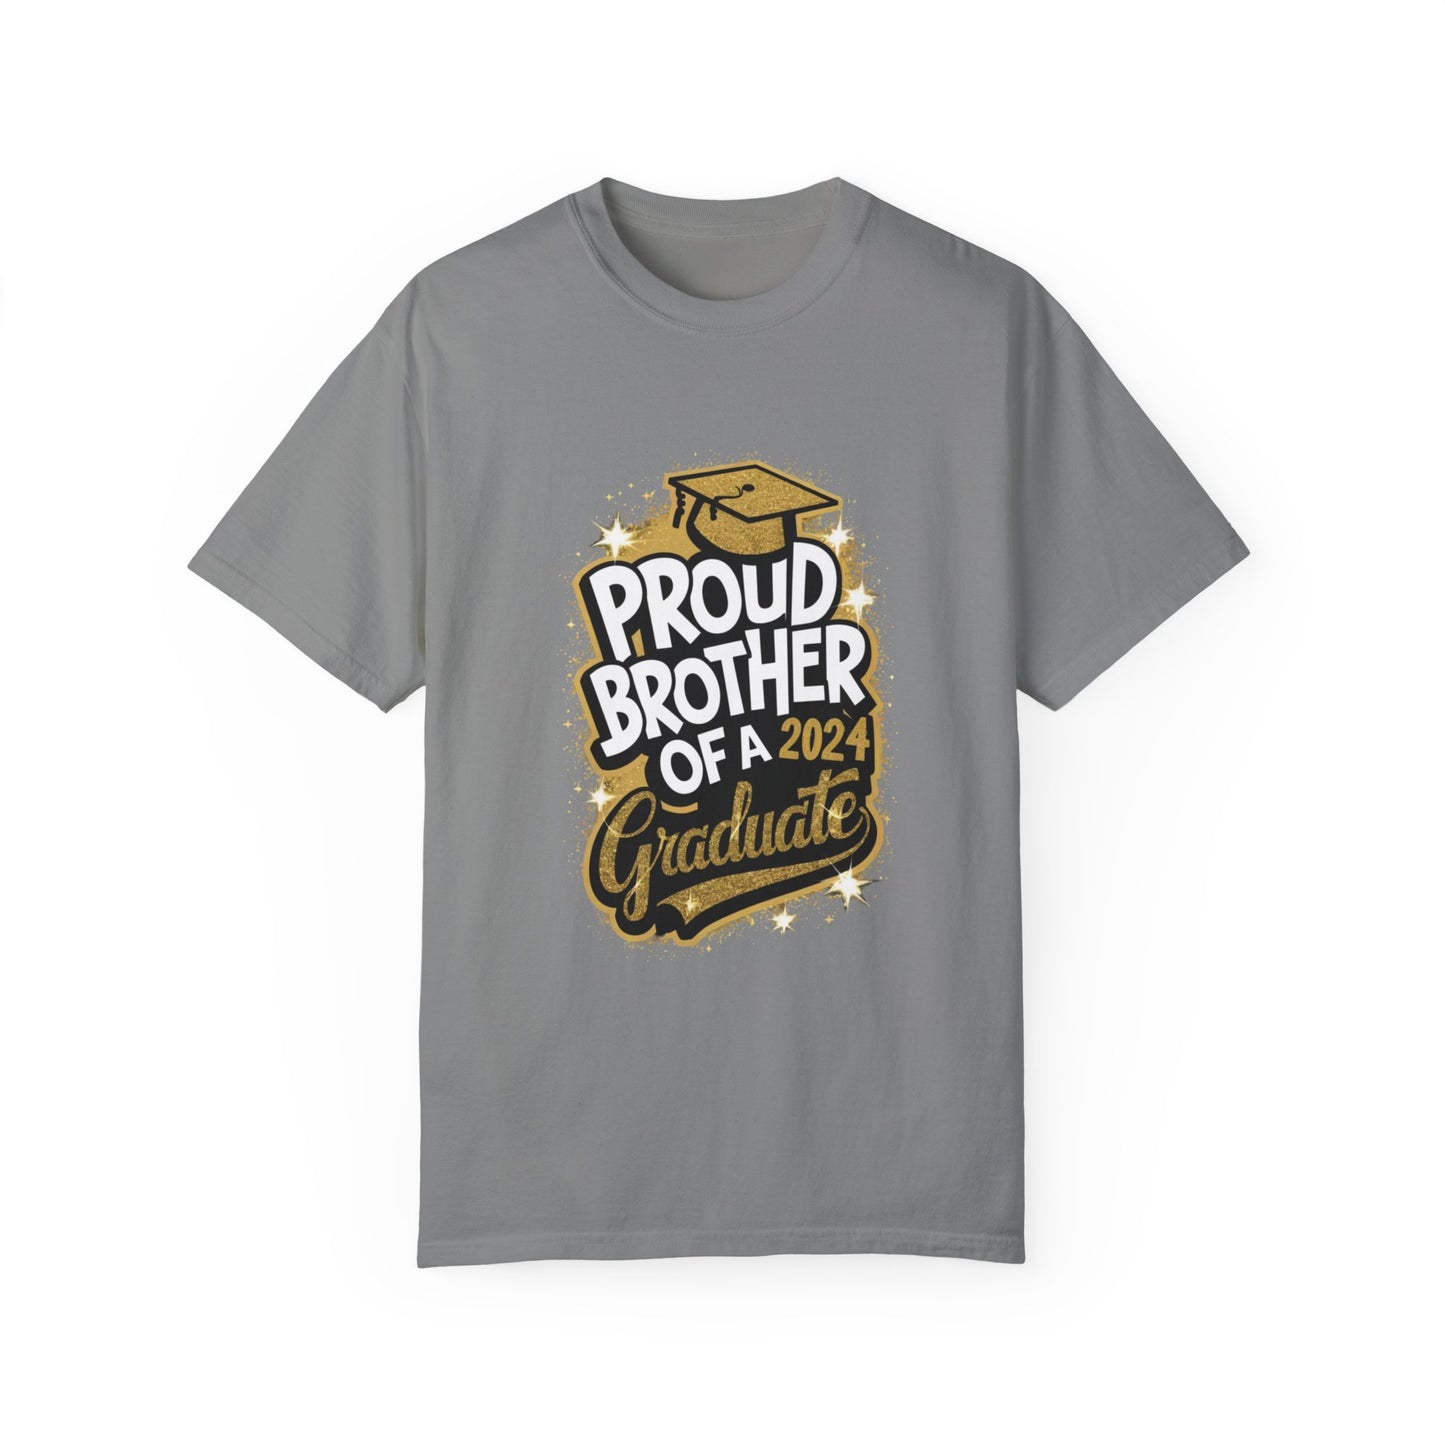 Proud Brother of a 2024 Graduate Unisex Garment-dyed T-shirt Cotton Funny Humorous Graphic Soft Premium Unisex Men Women Granite T-shirt Birthday Gift-4